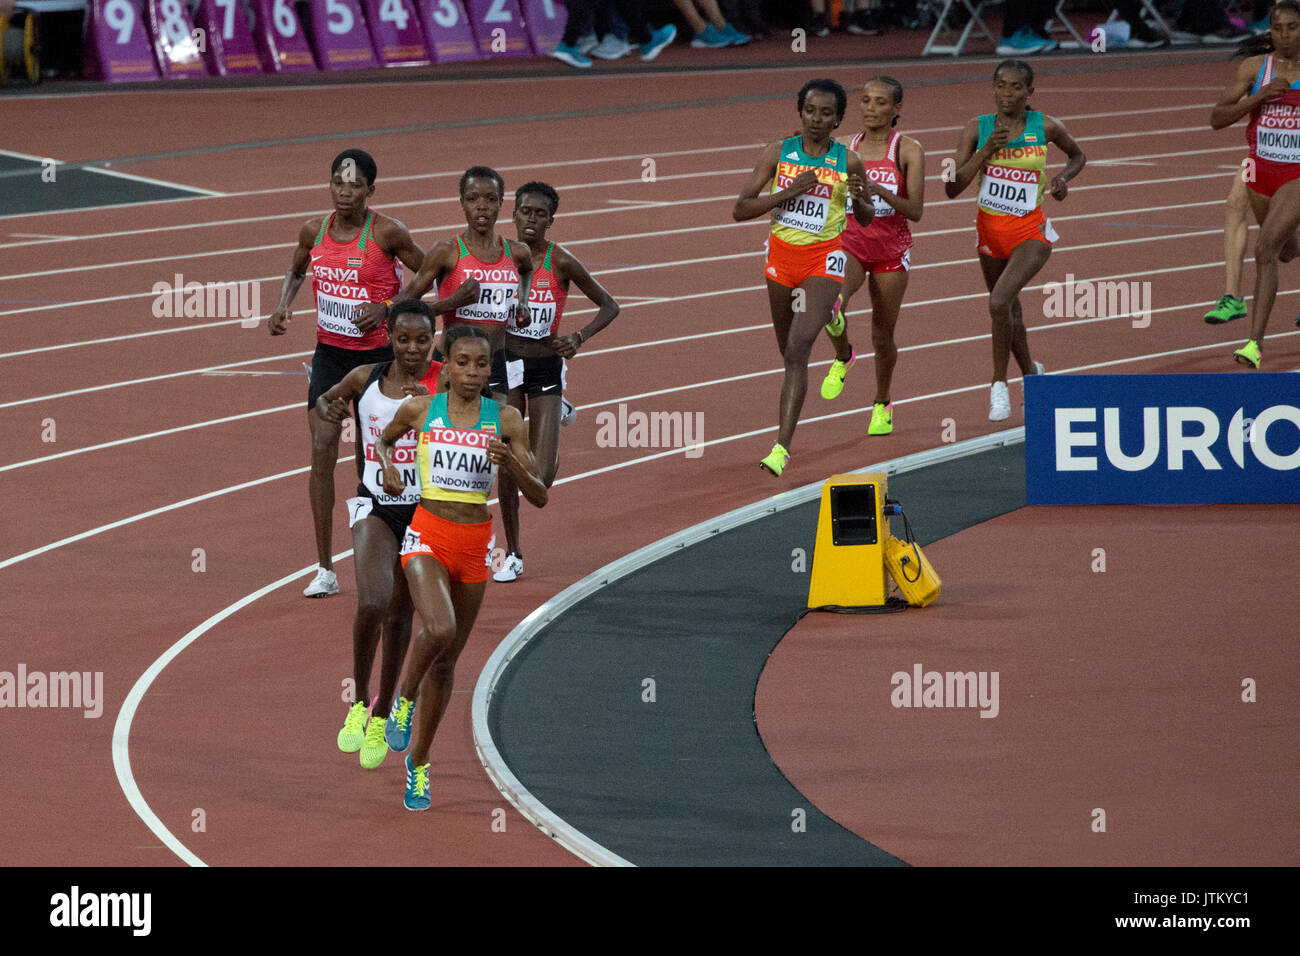 IAAF world athletic Championships, London stadium 2017 Stock Photo